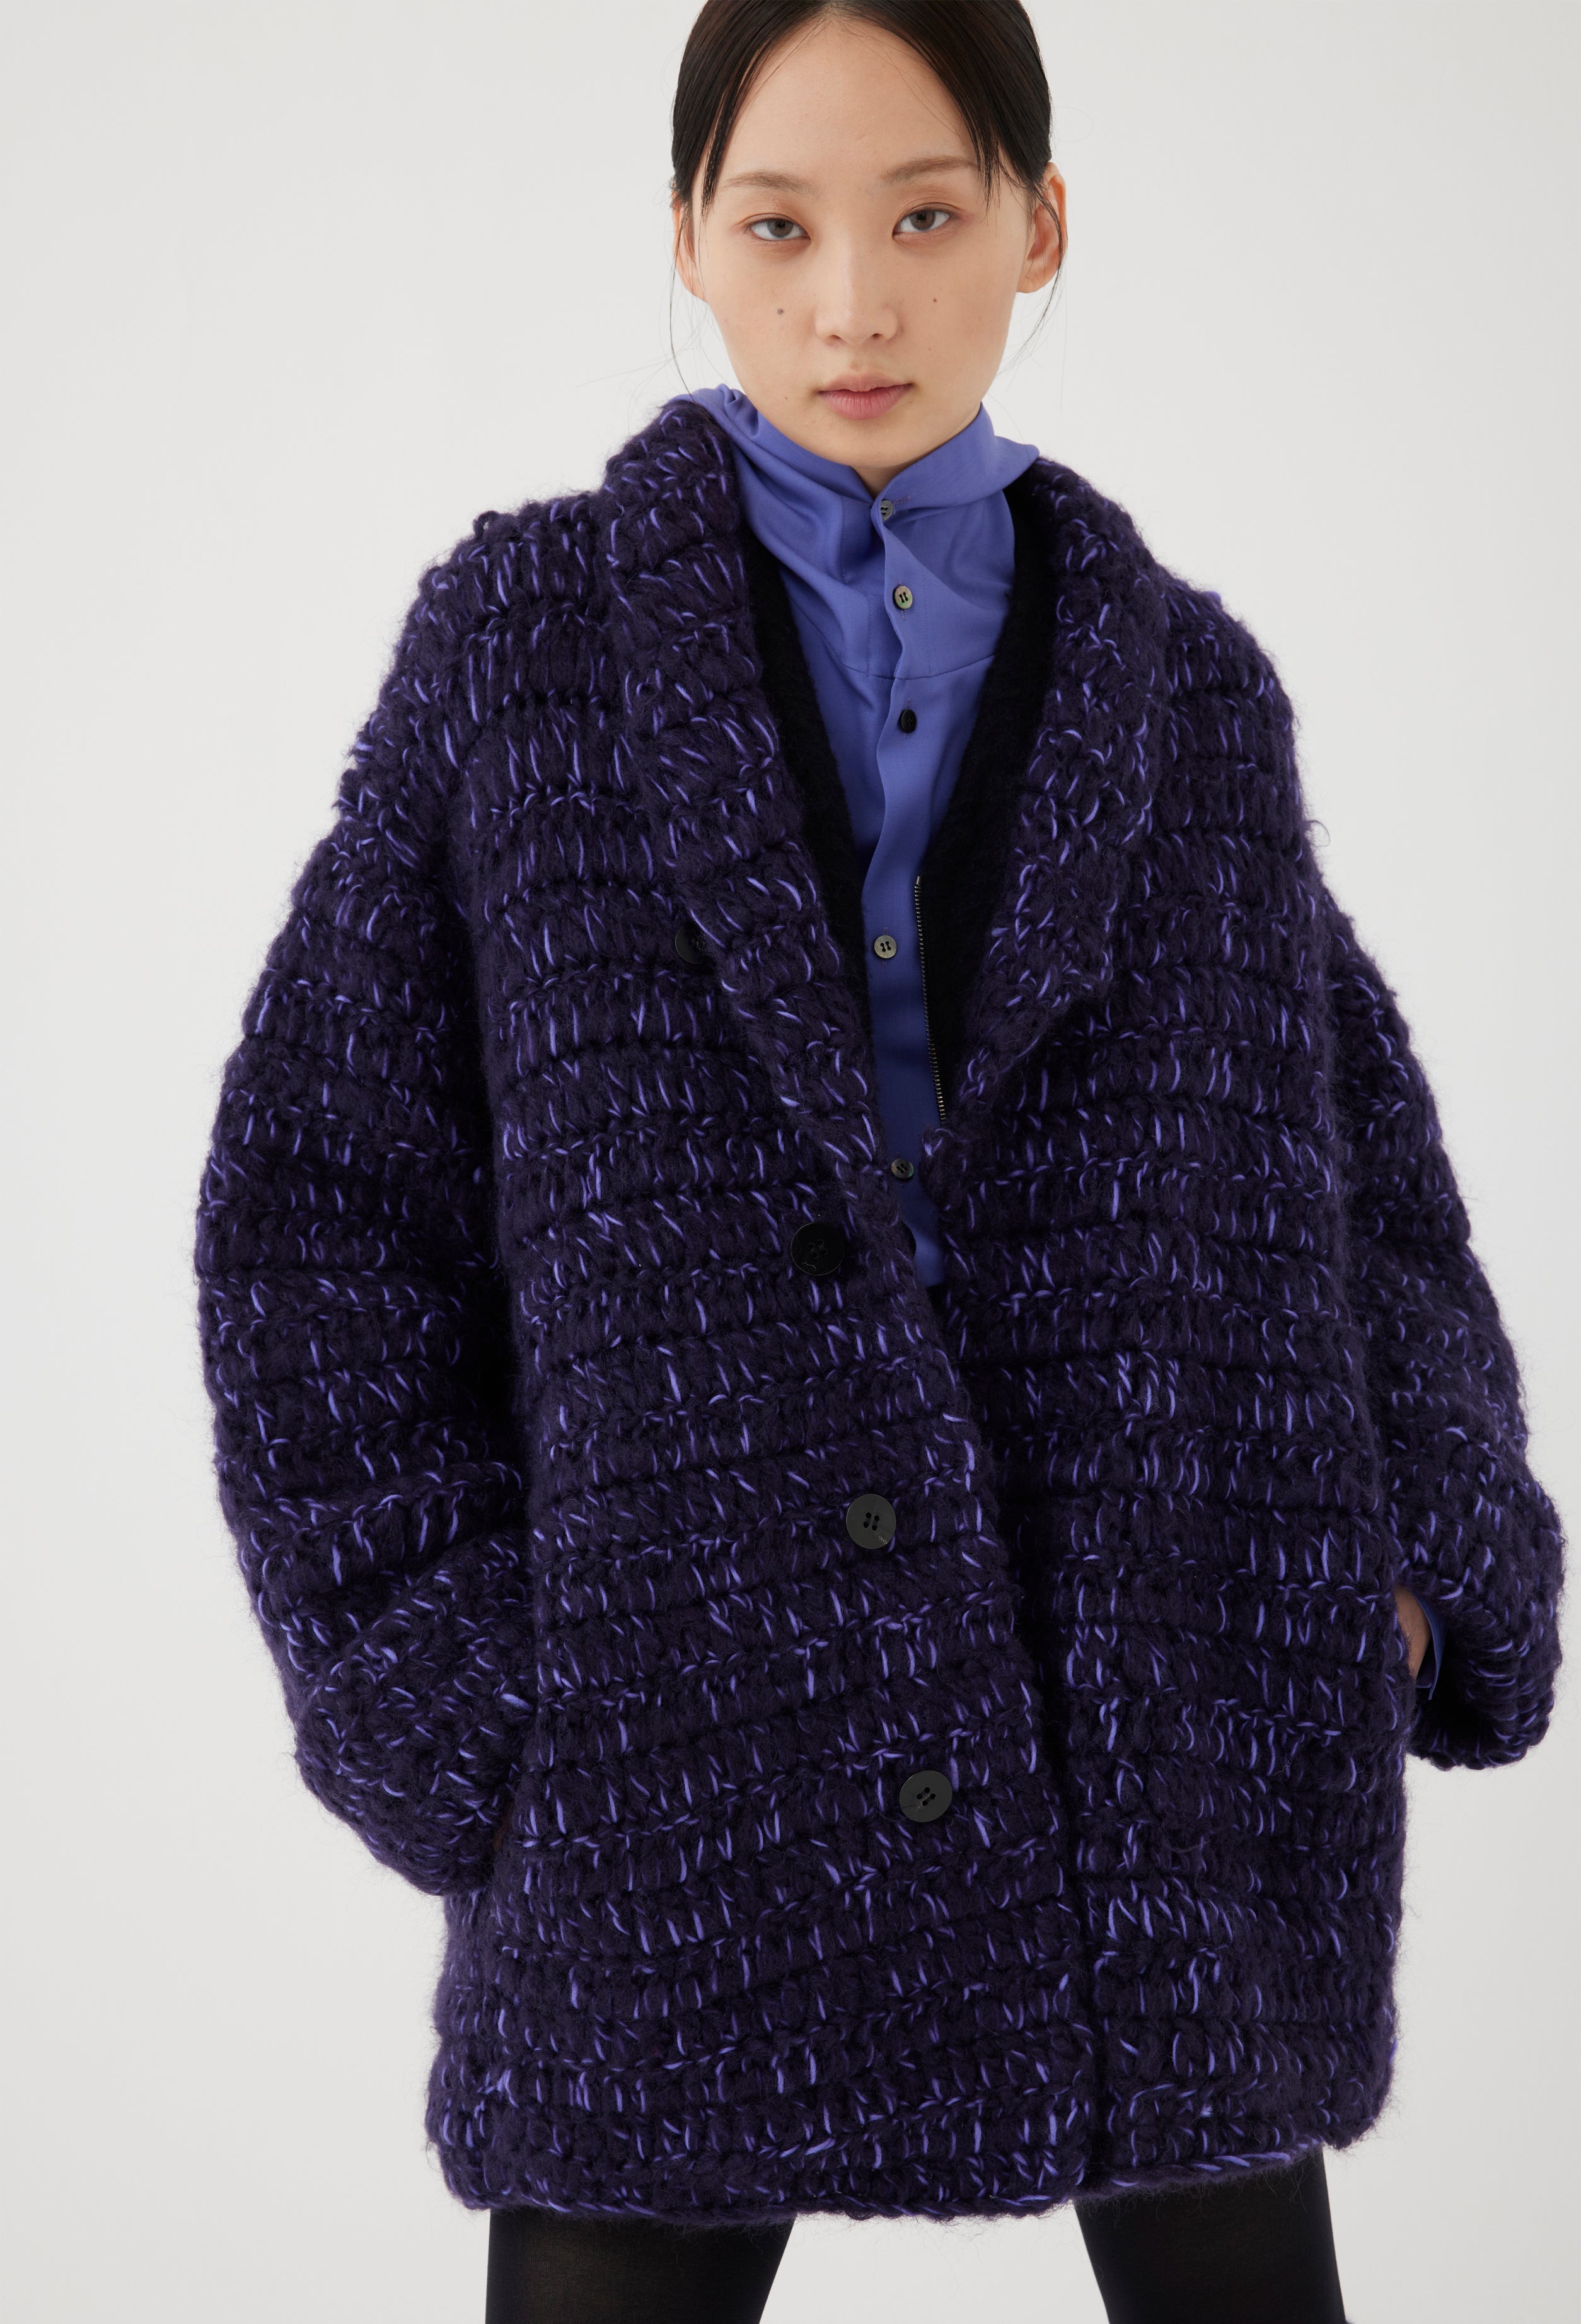 Wool Mohair Hand-knit Crochet Cardigan